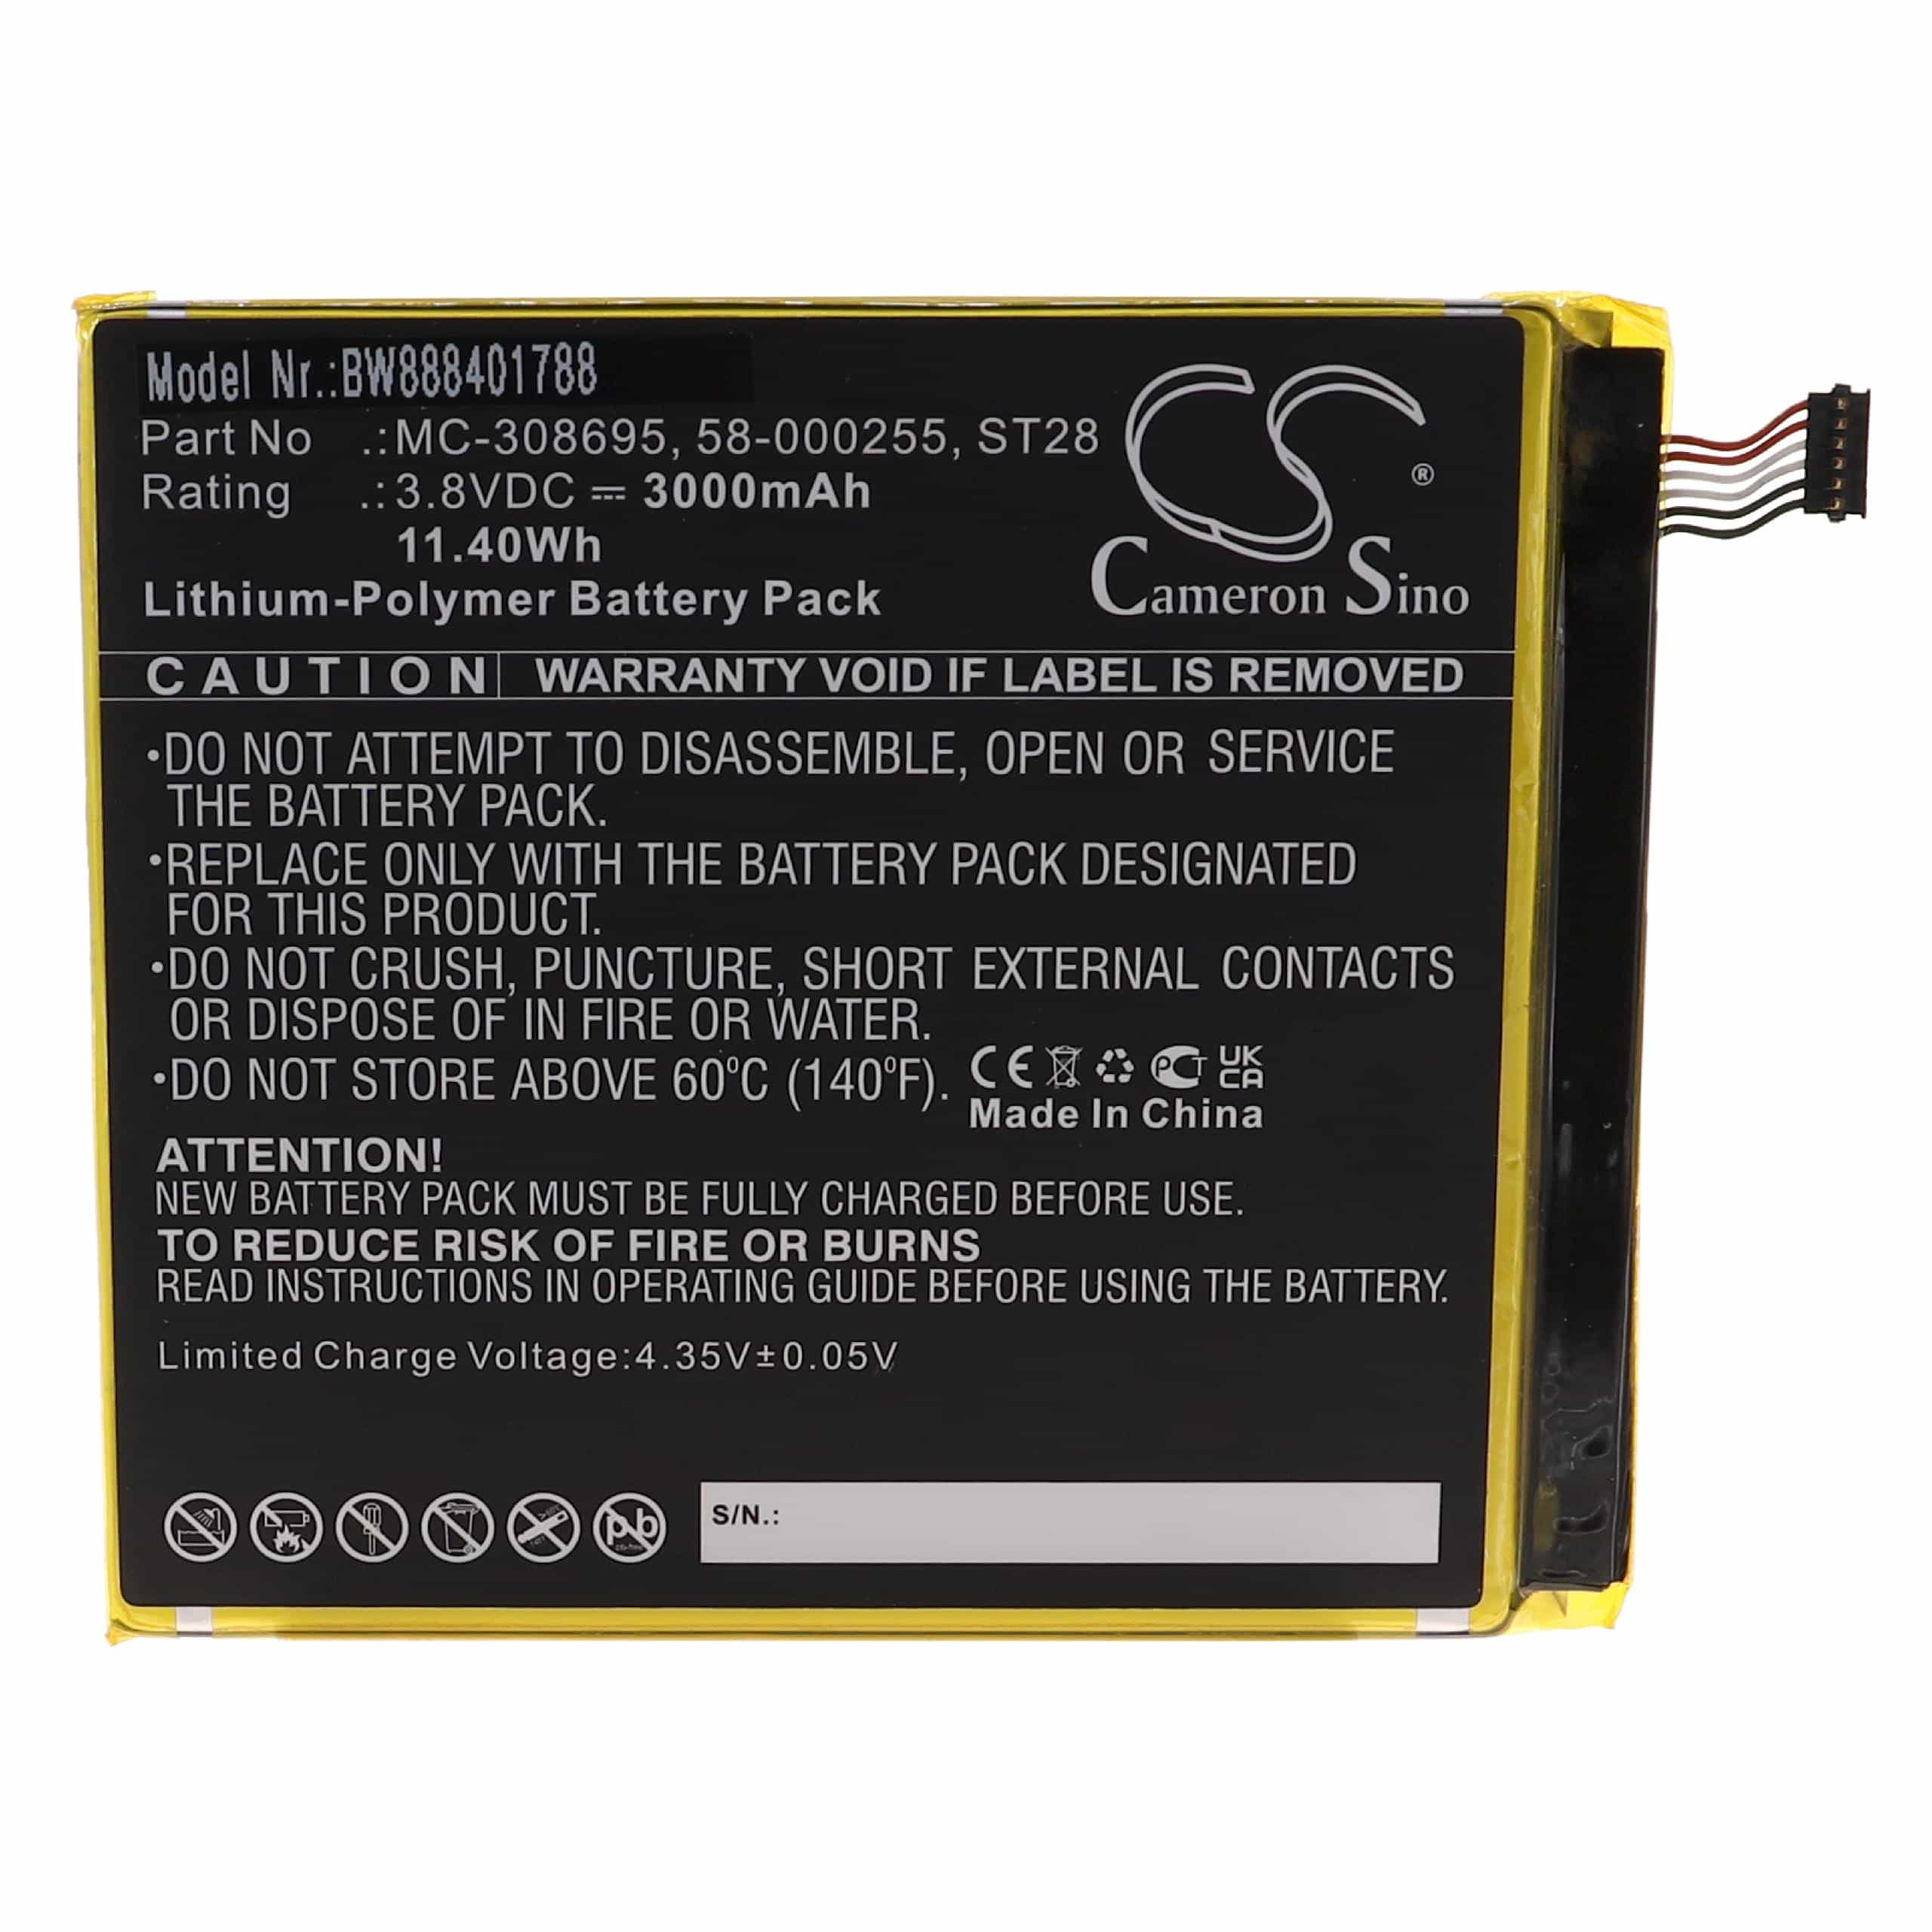 Akumulator zamiennik Amazon ST28, MC-308695, 58-000255 - 3000 mAh 3,8 V LiPo